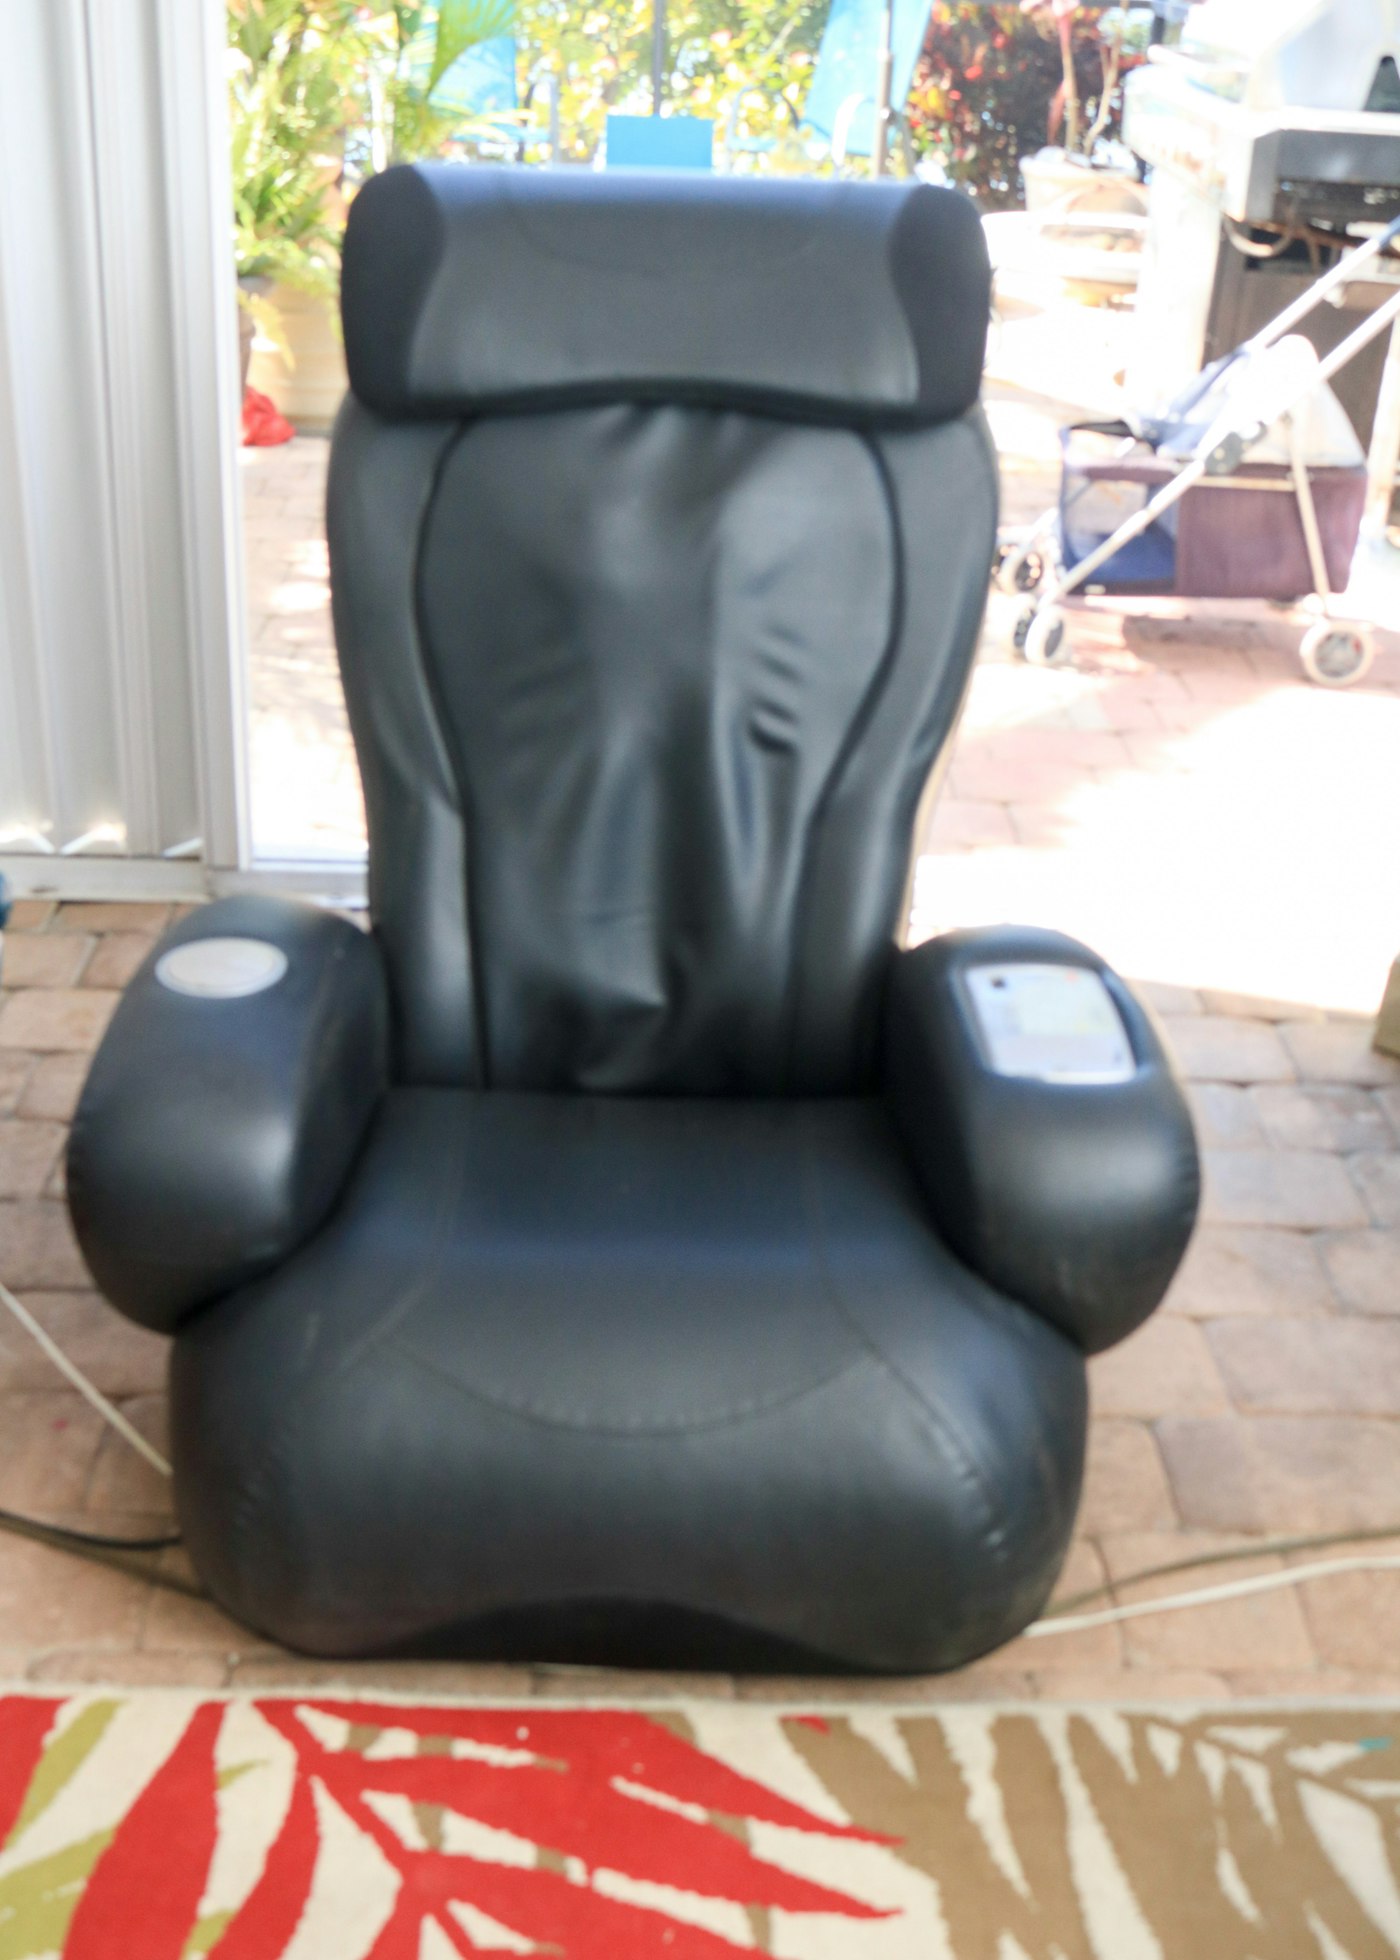 iJoy Turbo 2 Massage Chair with Ottoman | EBTH